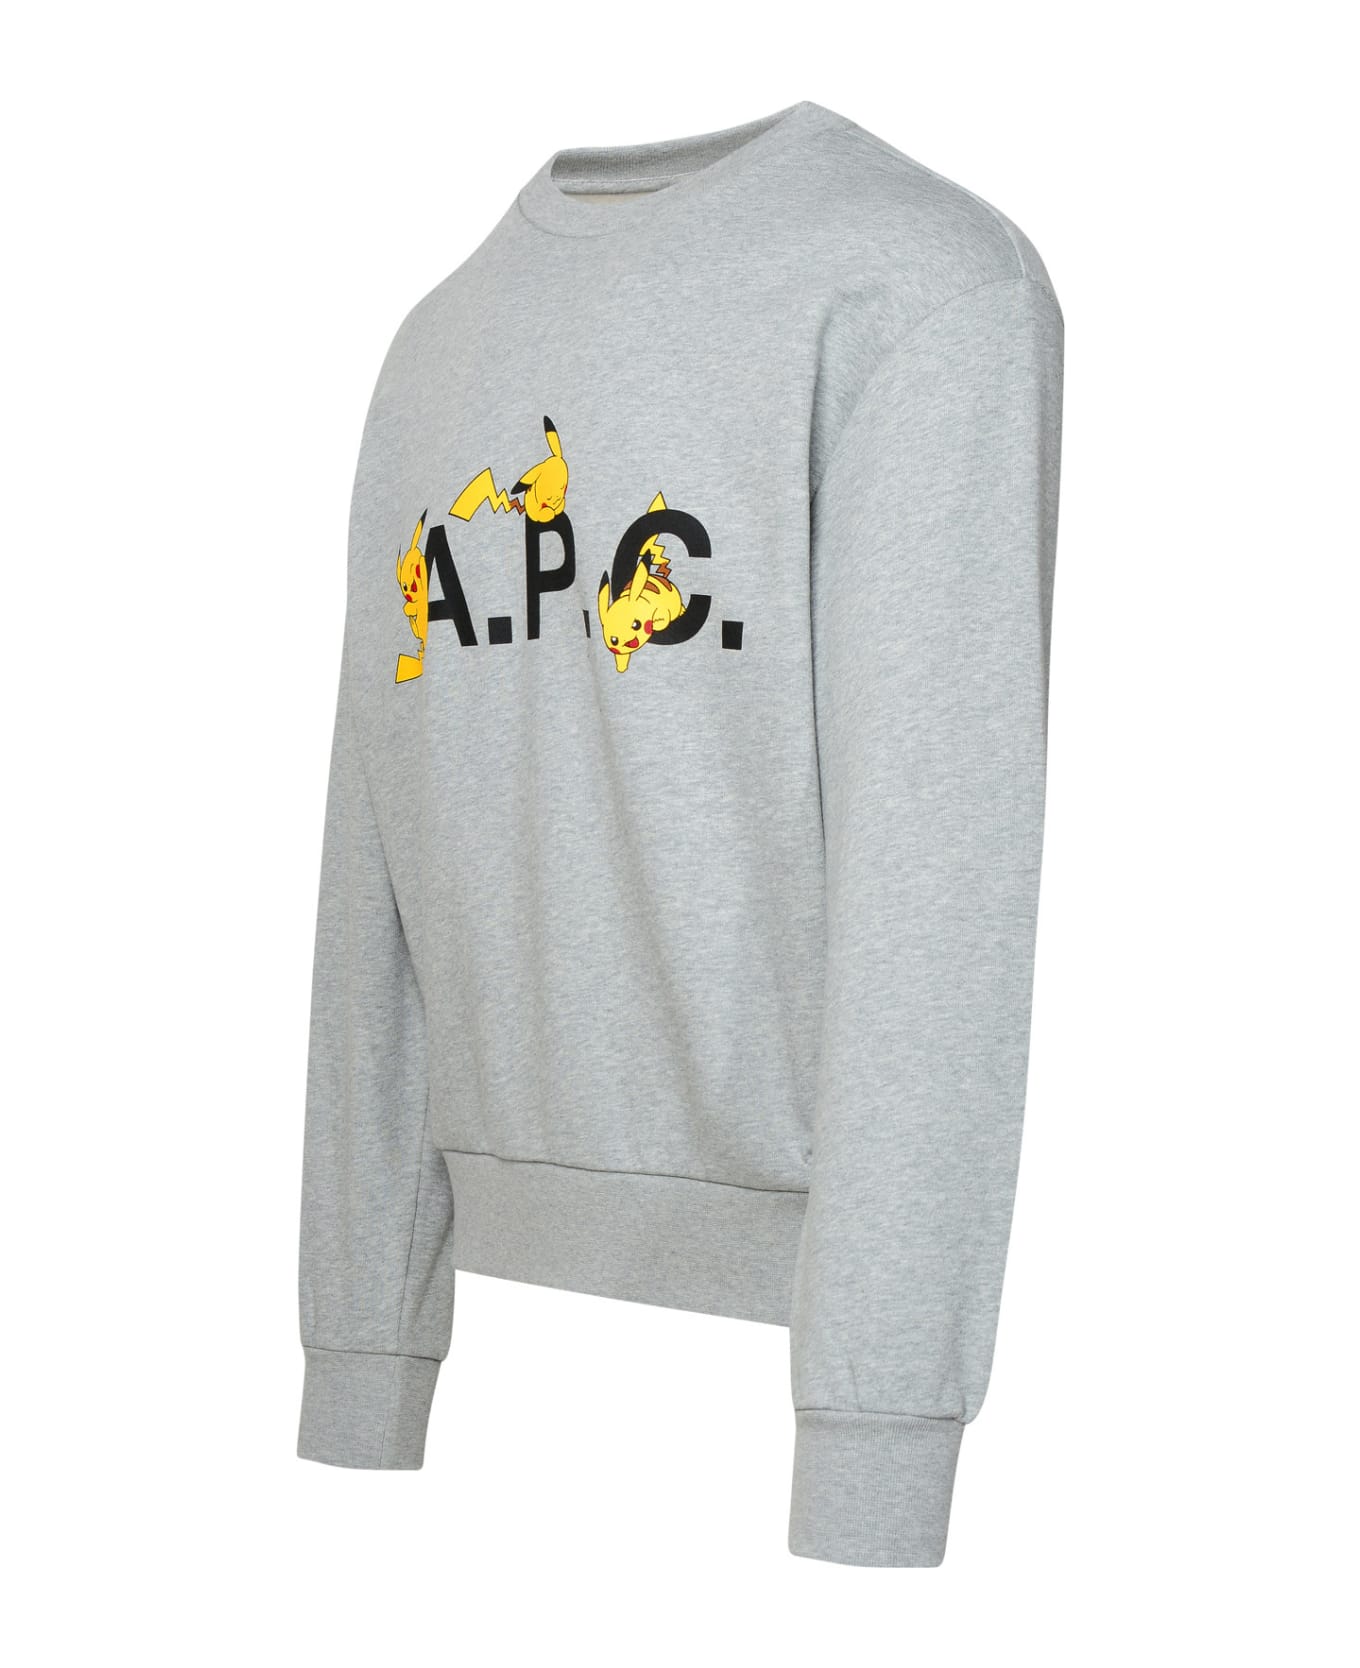 A.P.C. 'pokémon Pikachu' Grey Cotton Sweatshirt - Grey